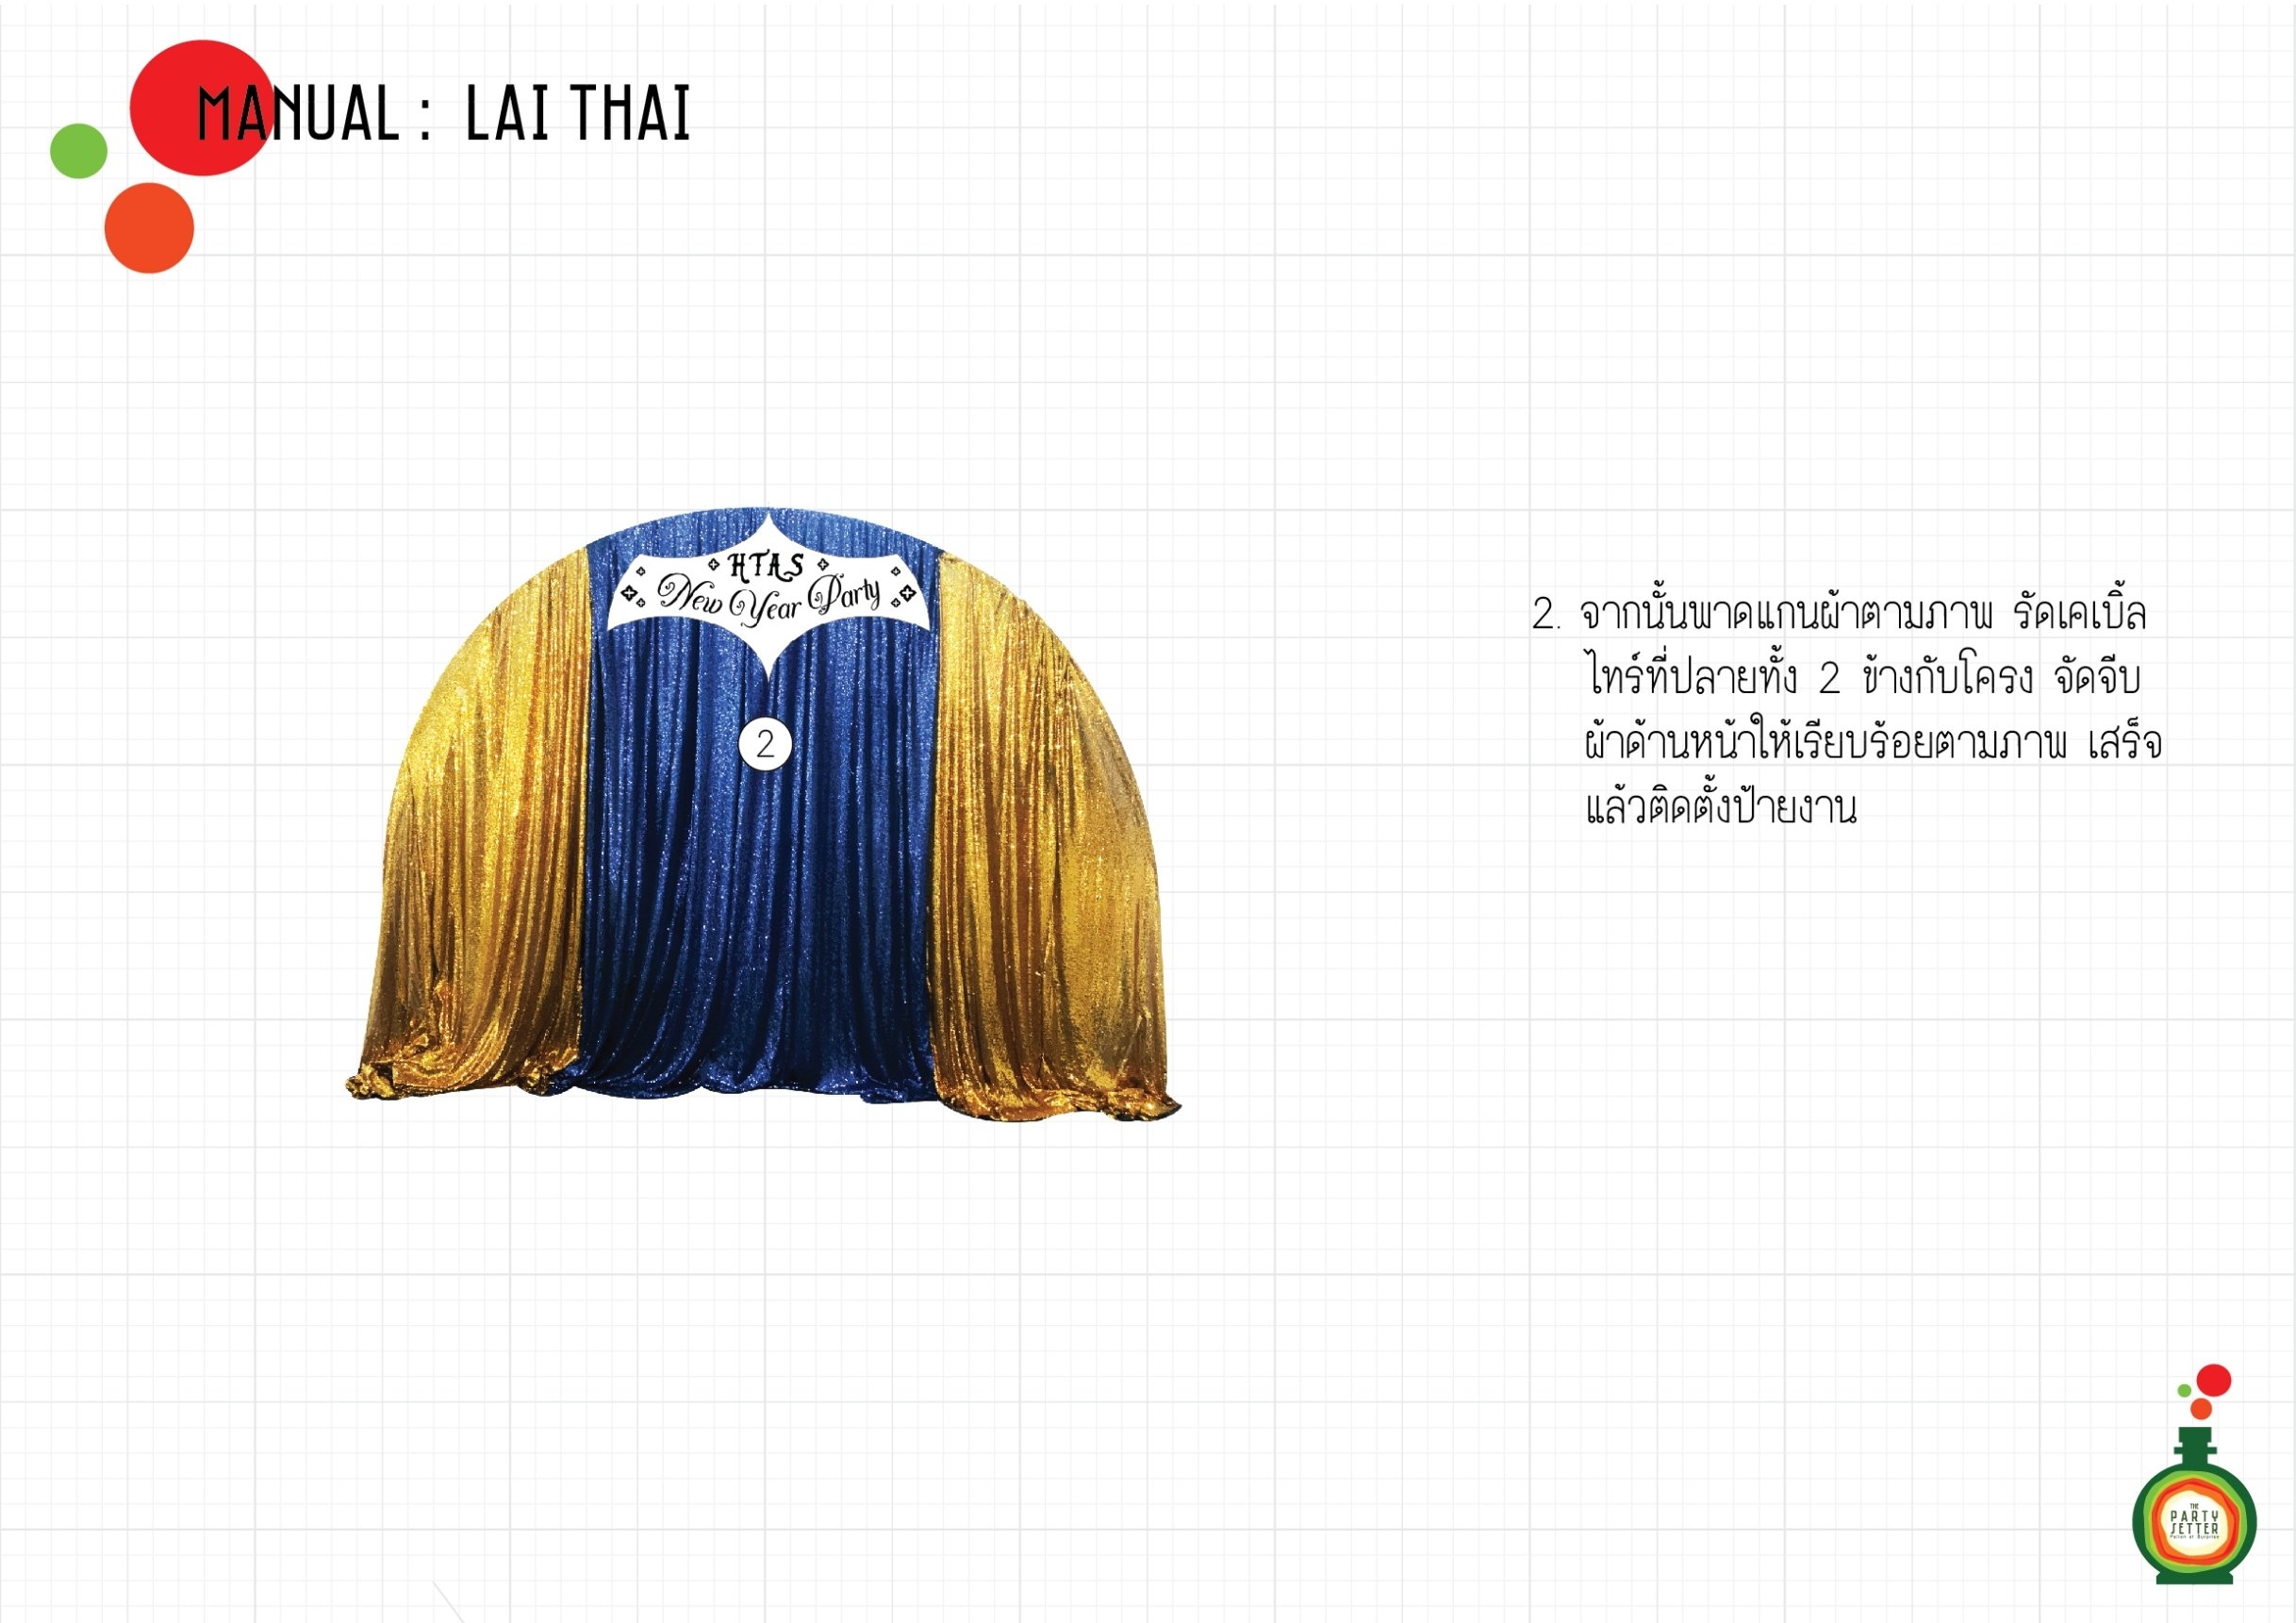 Manual_Lai Thai_02-01.jpg